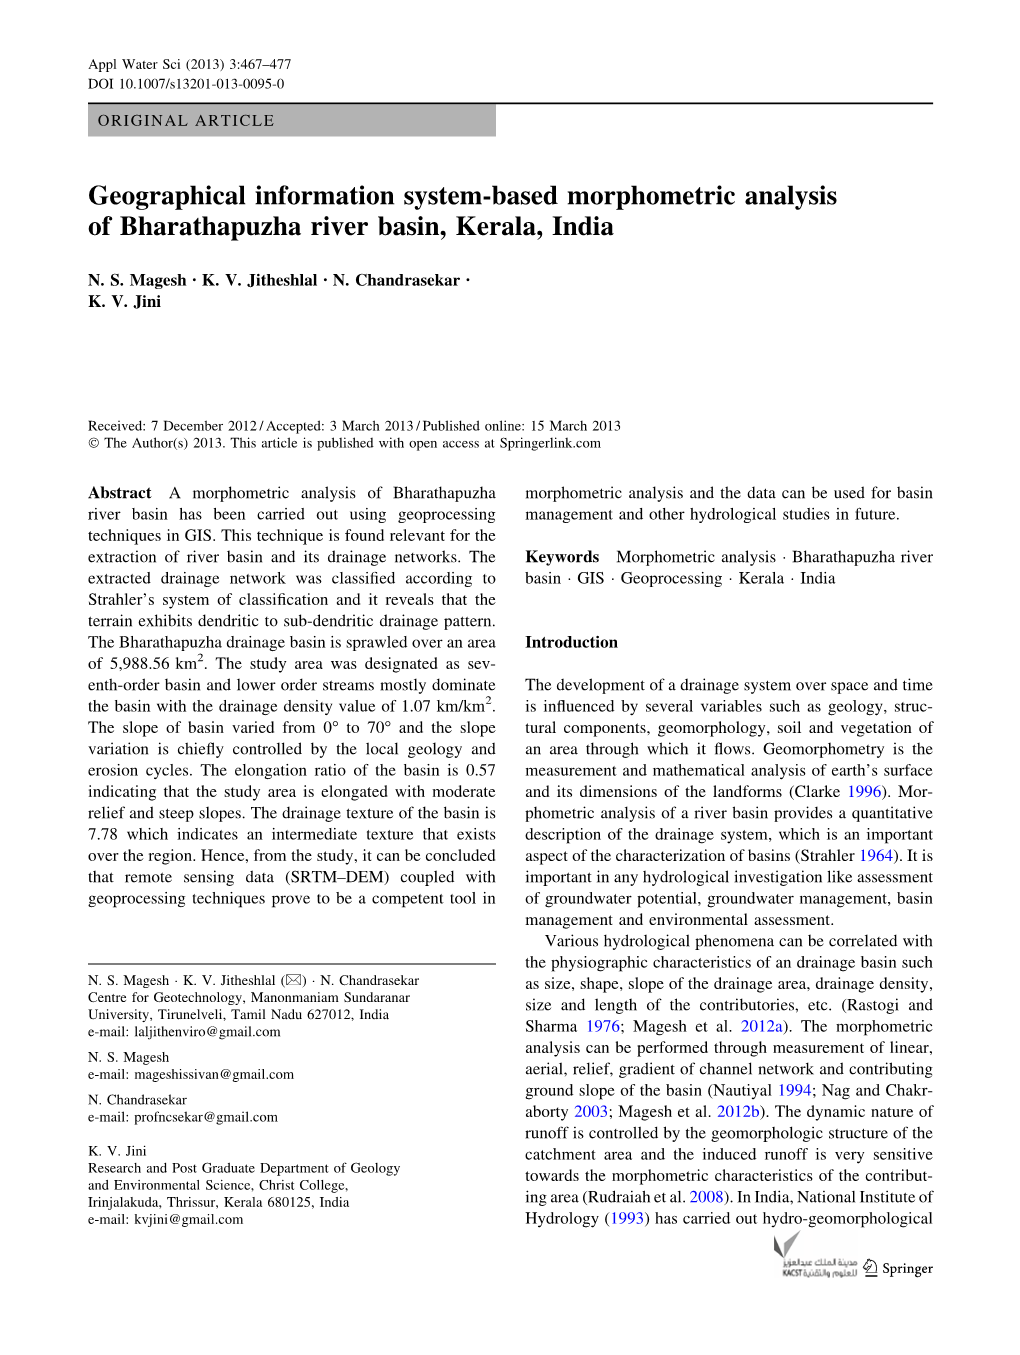 Geographical Information System-Based Morphometric Analysis of Bharathapuzha River Basin, Kerala, India